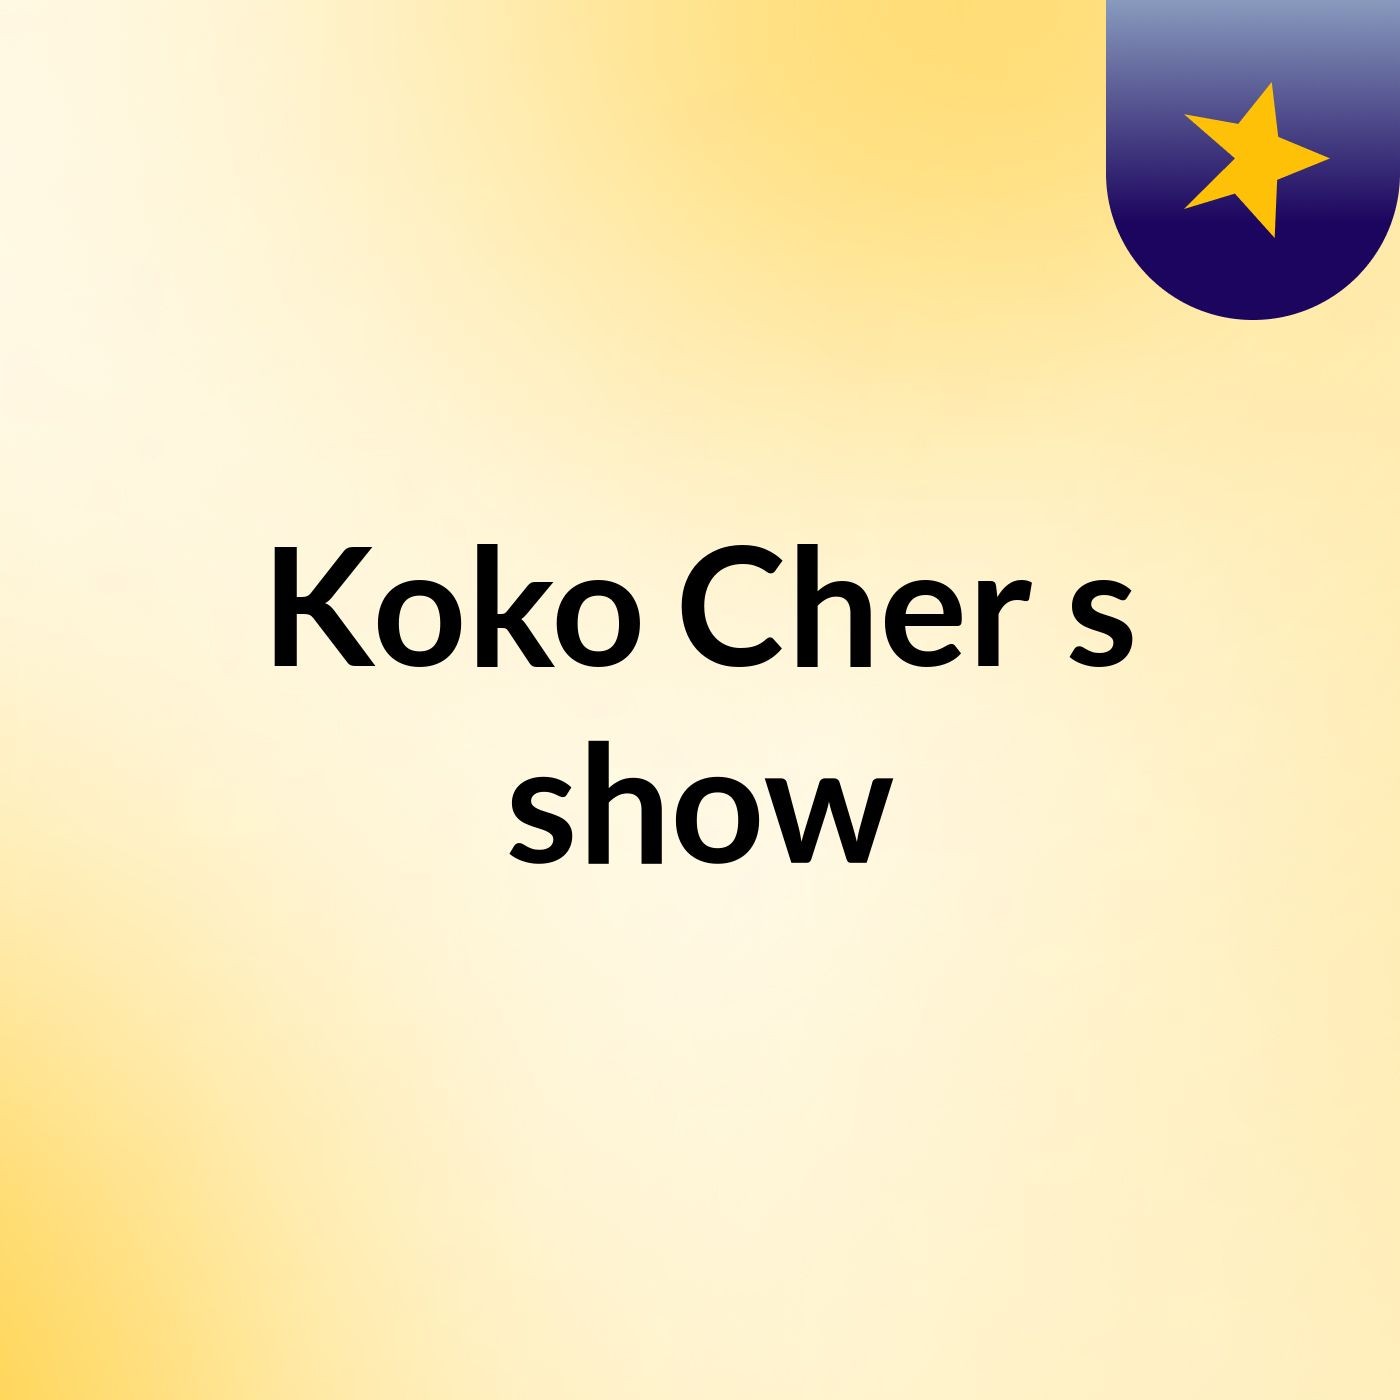 Koko Cher's show